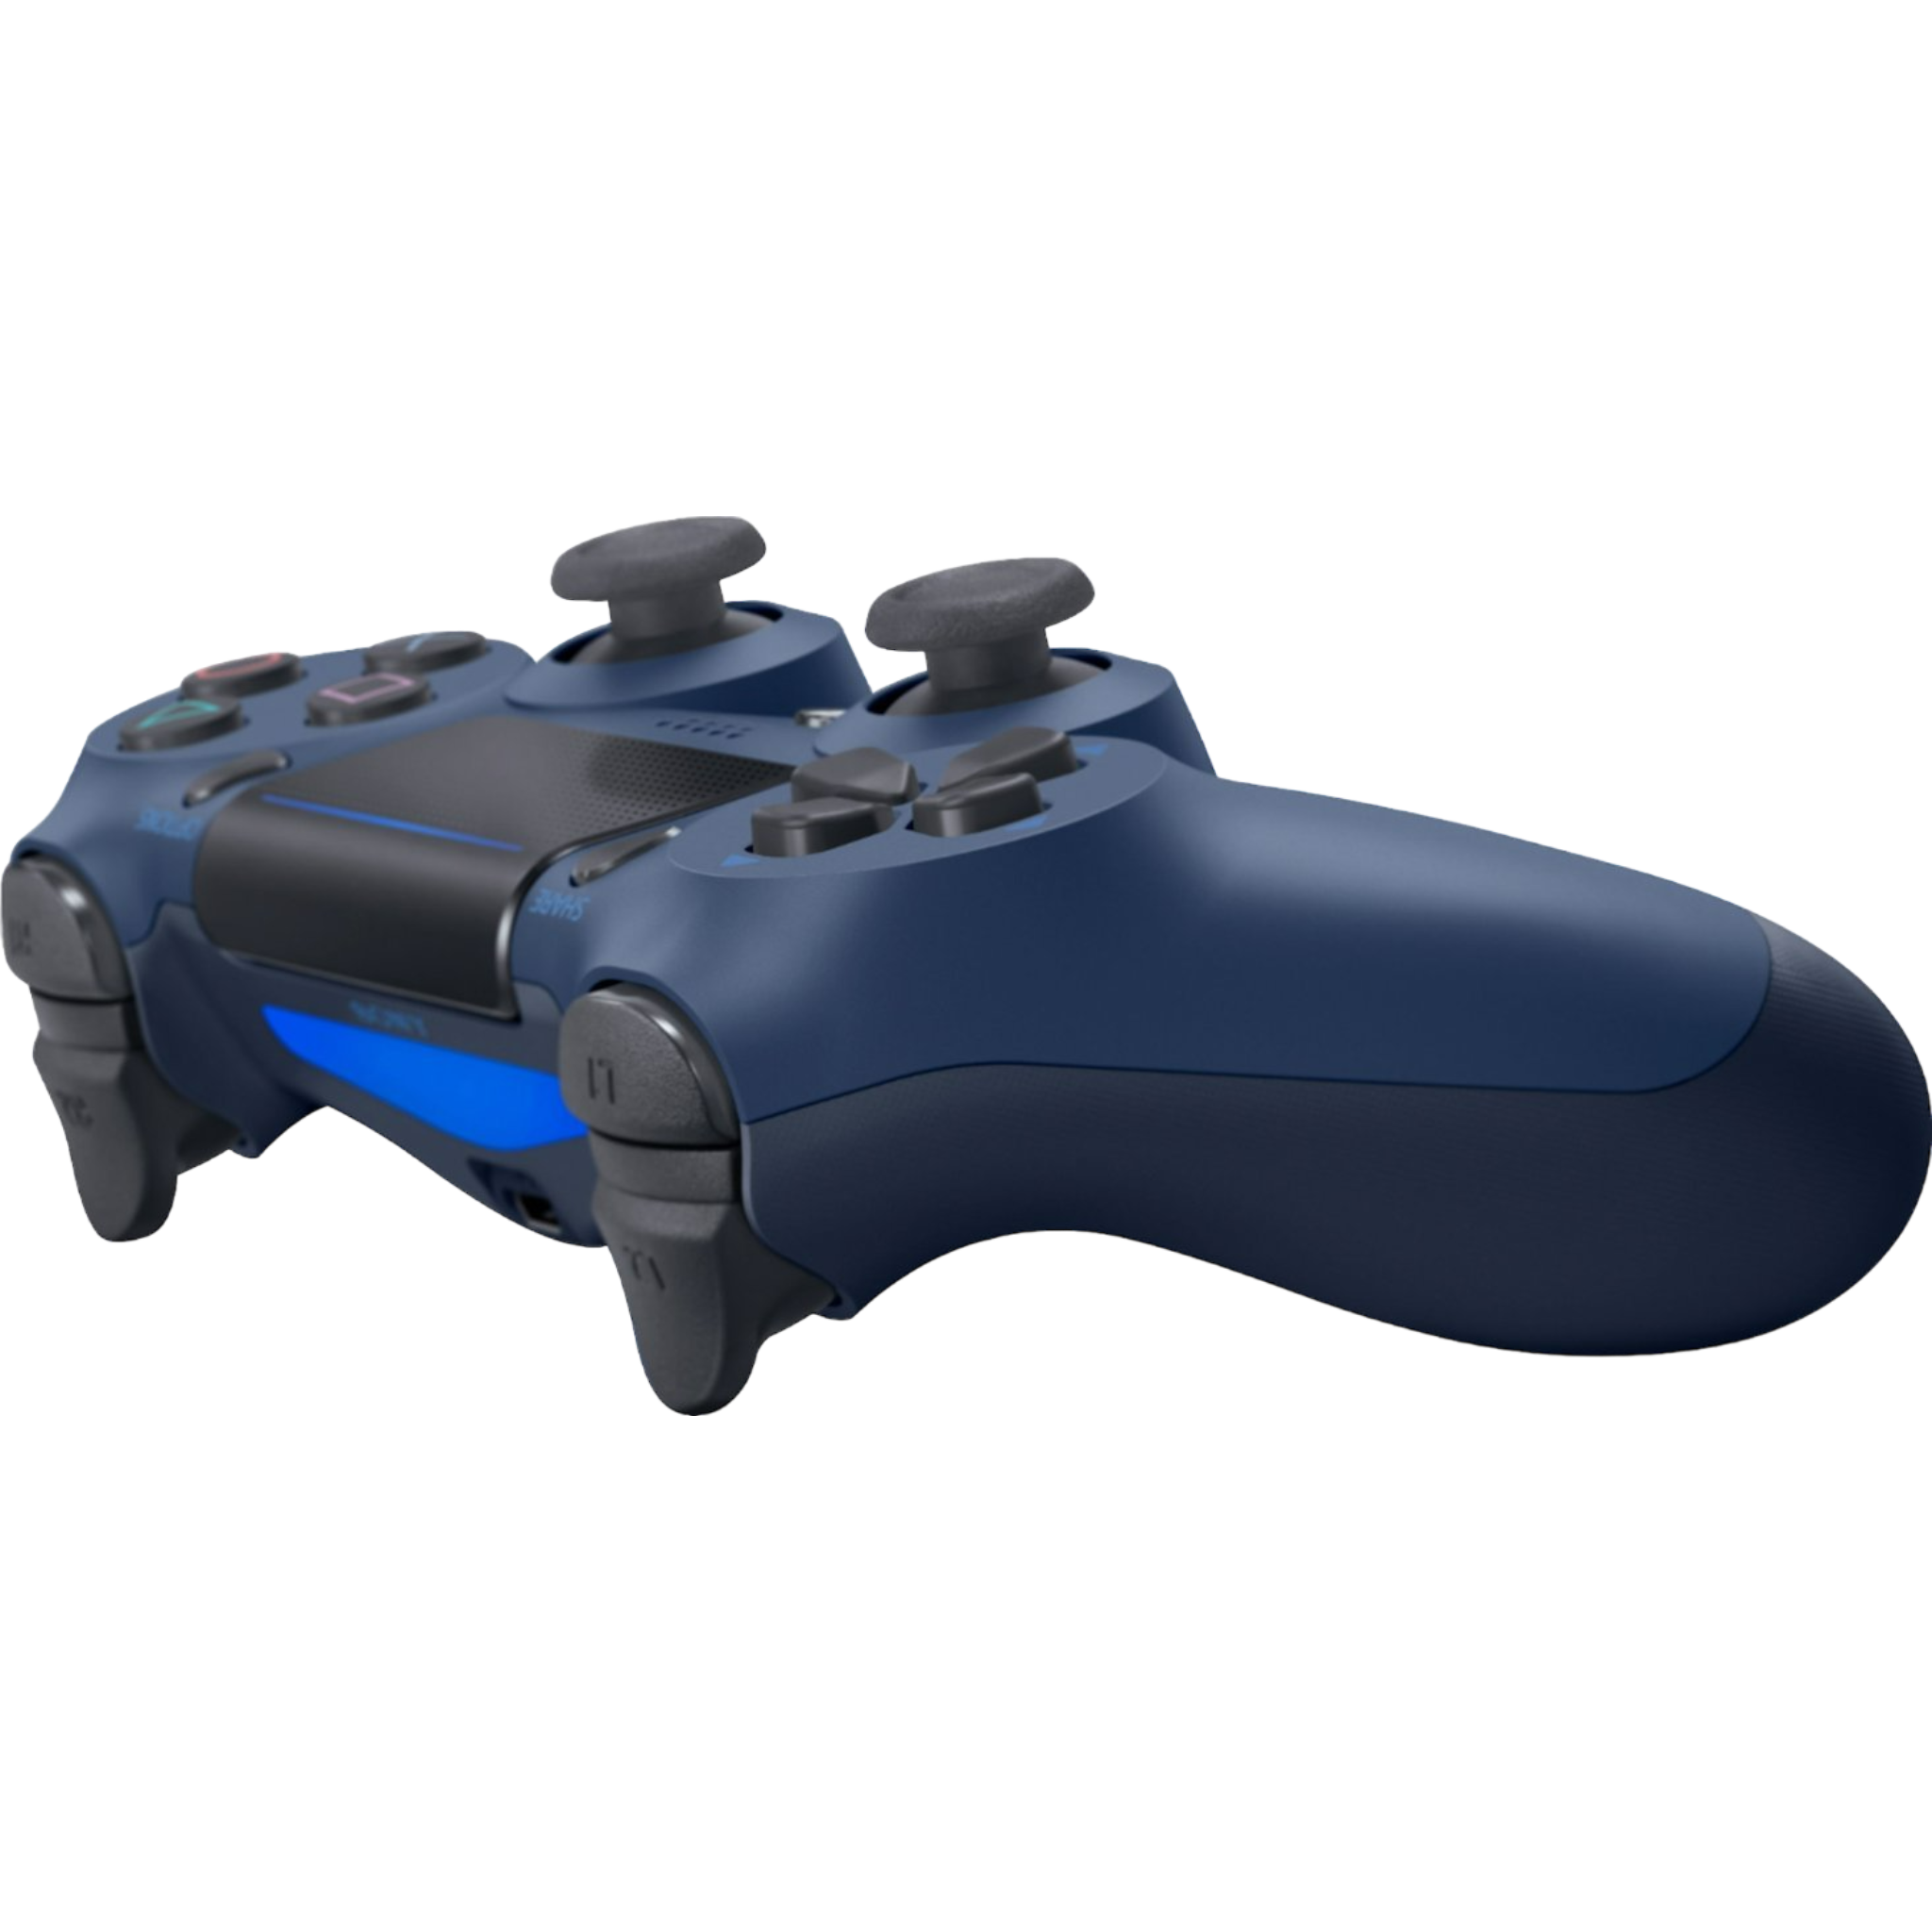 Sony PlayStation 4 DualShock 4 Wireless Controller - Midnight Blue - New Version - Pro-Distributing